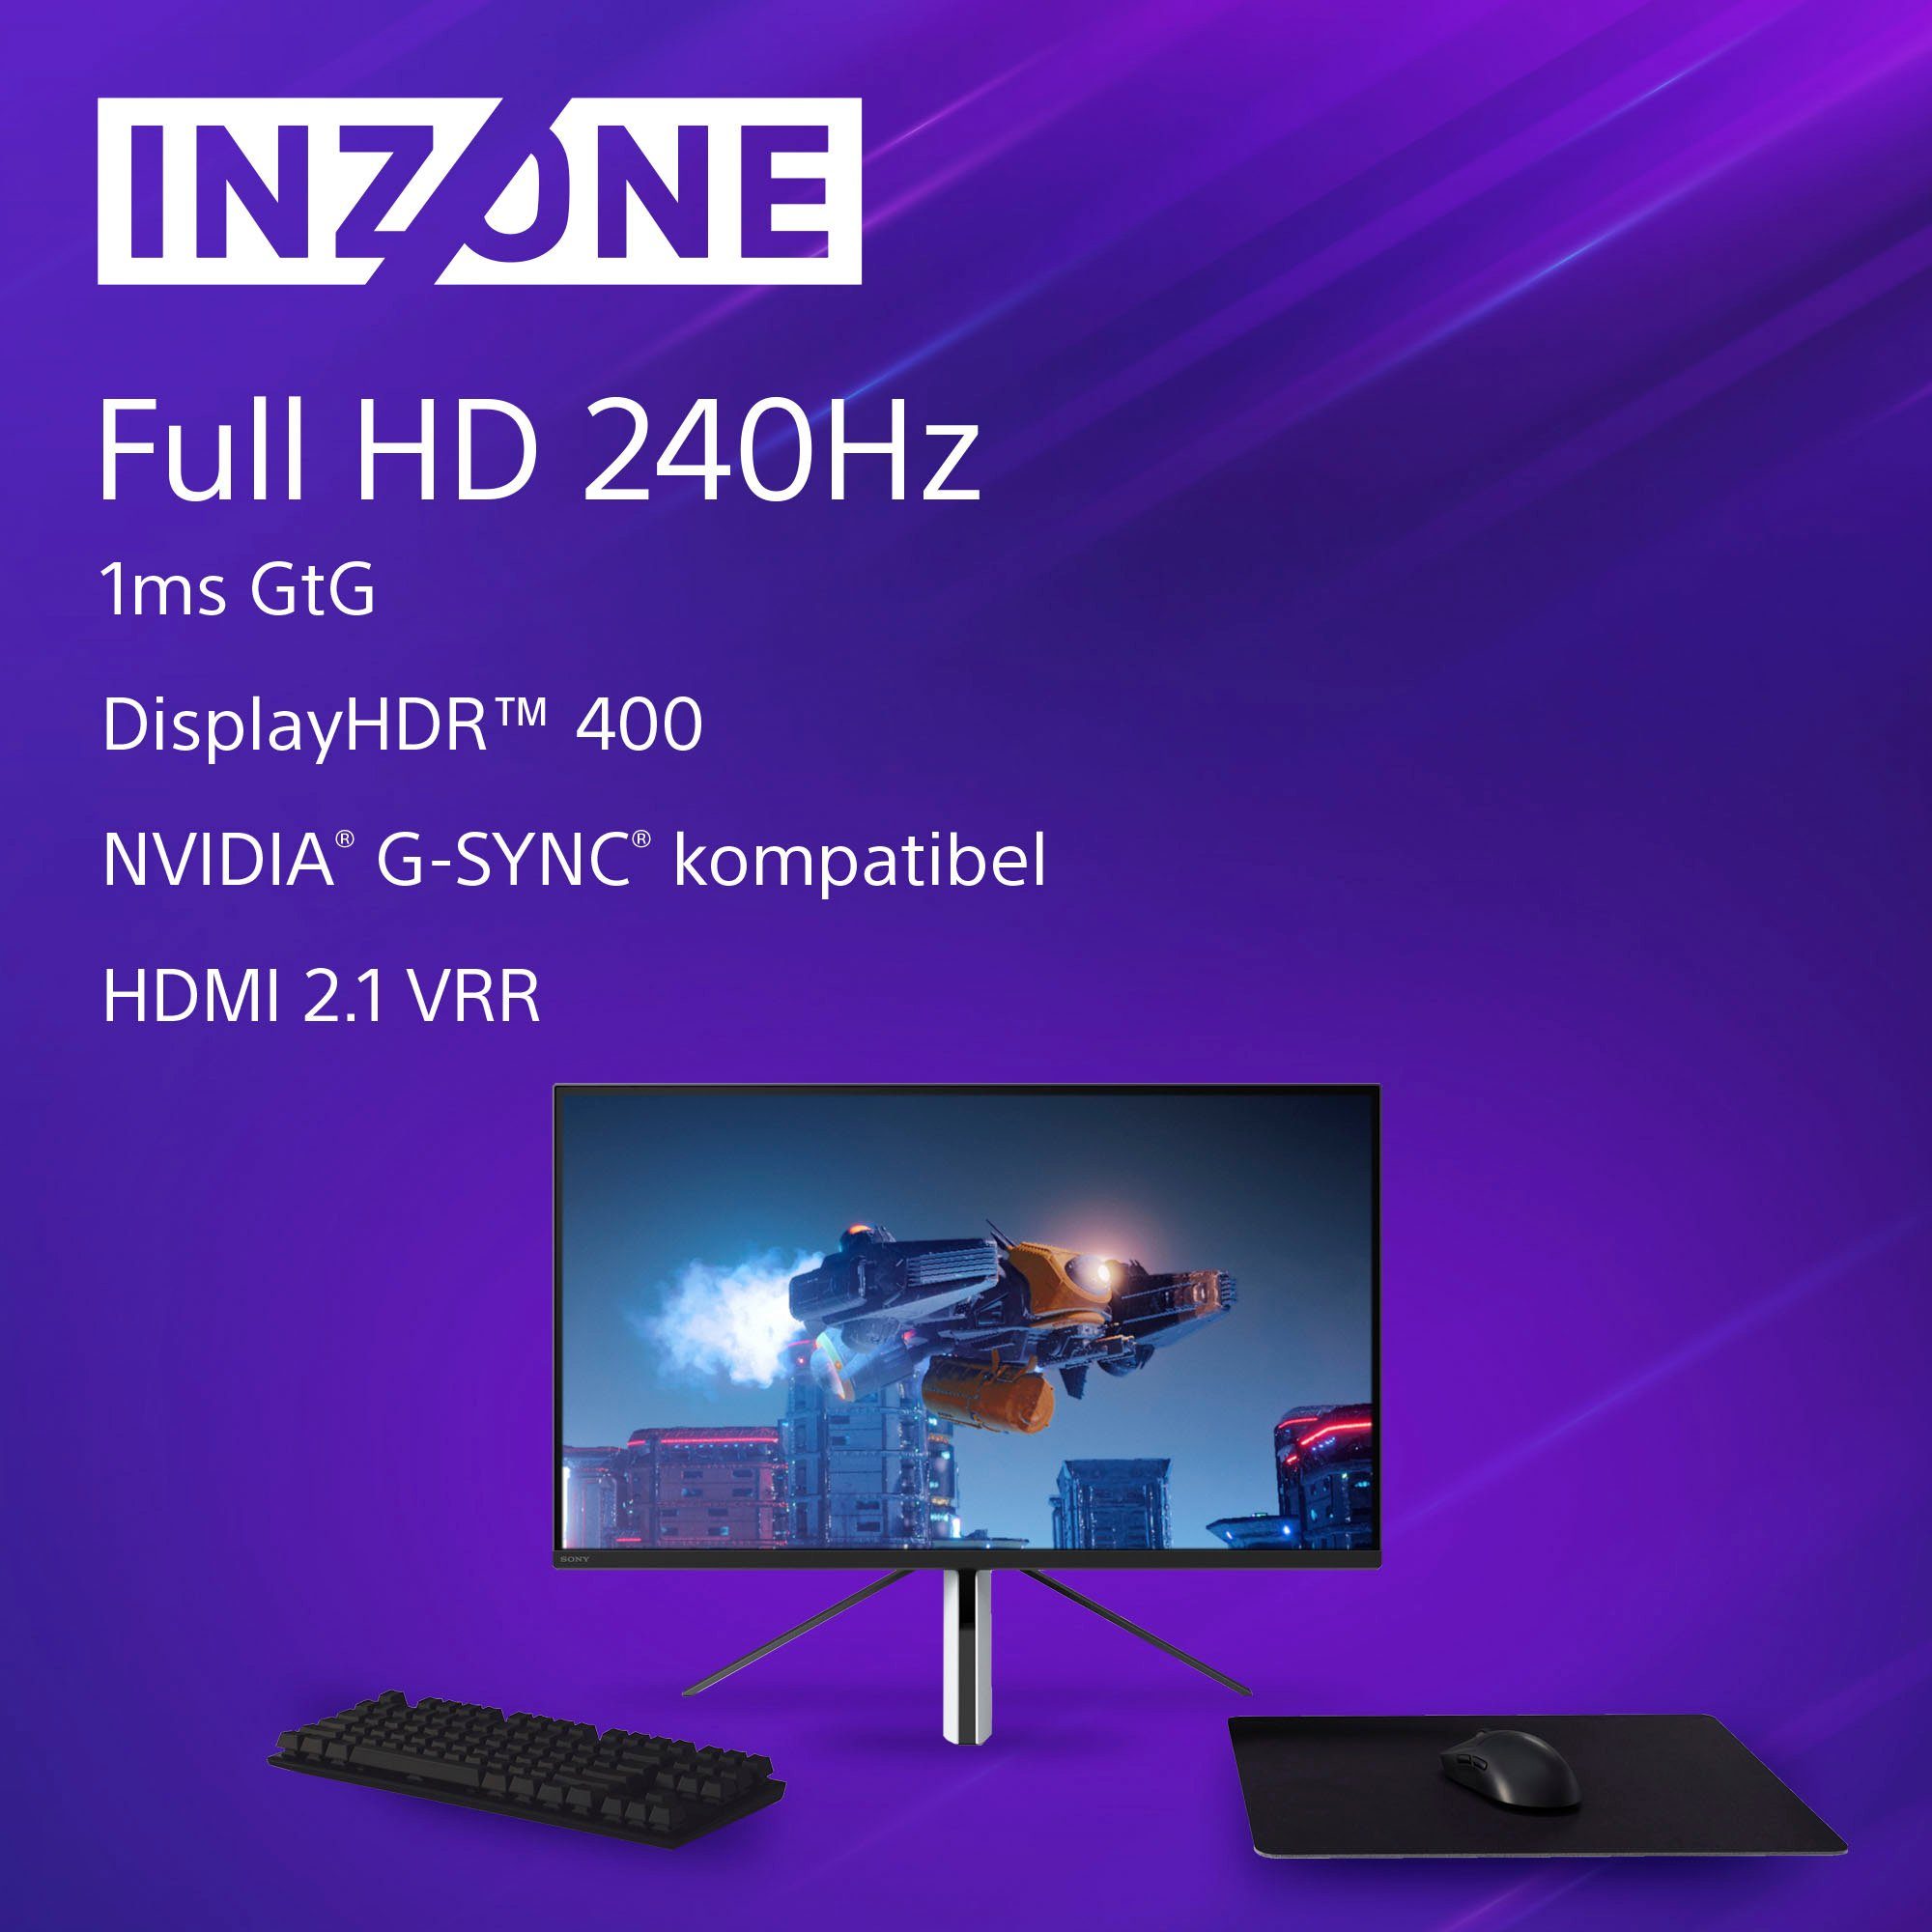 INZONE 1 IPS-LCD, ", M3 1080 cm/27 Hz, px, Reaktionszeit, Sony für ms 1920 Gaming-Monitor 240 Perfekt PlayStation®5) (69 Full HD, x